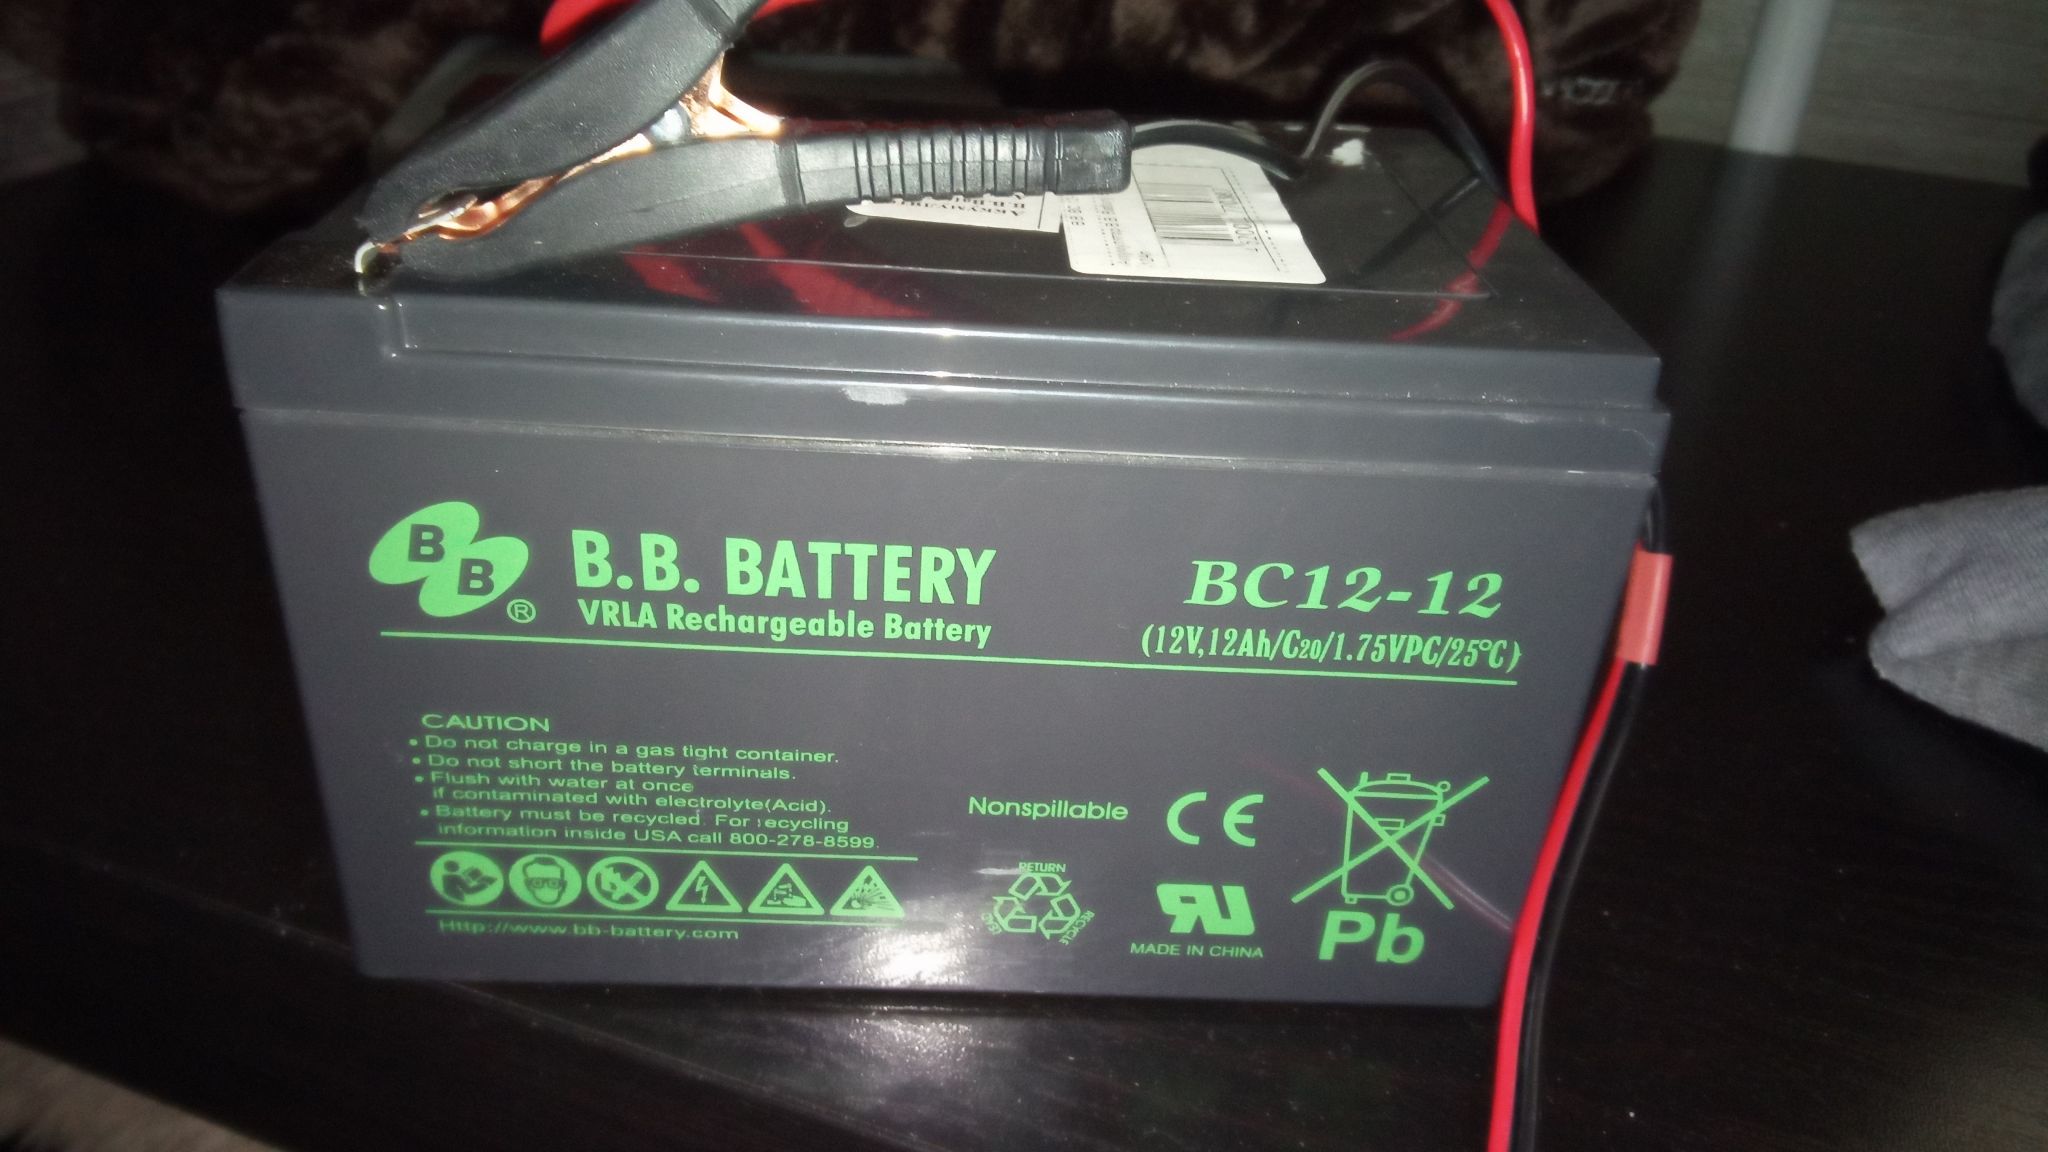 Bp battery